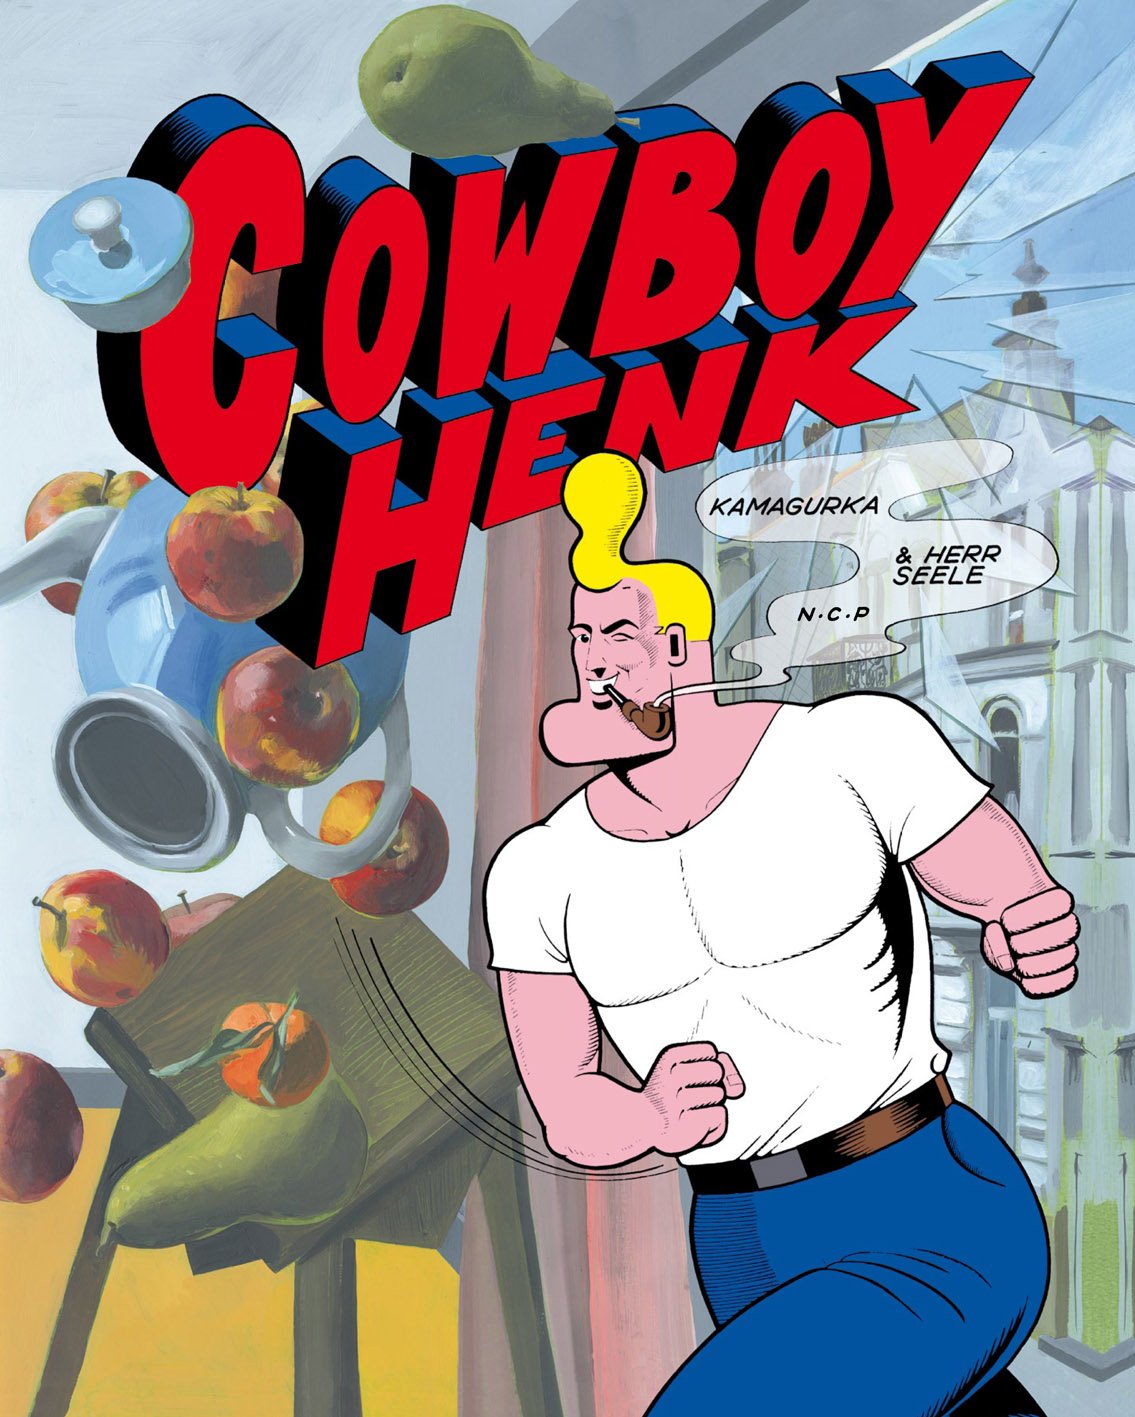 Kamagurka & Herr Seele: Cowboy Henk